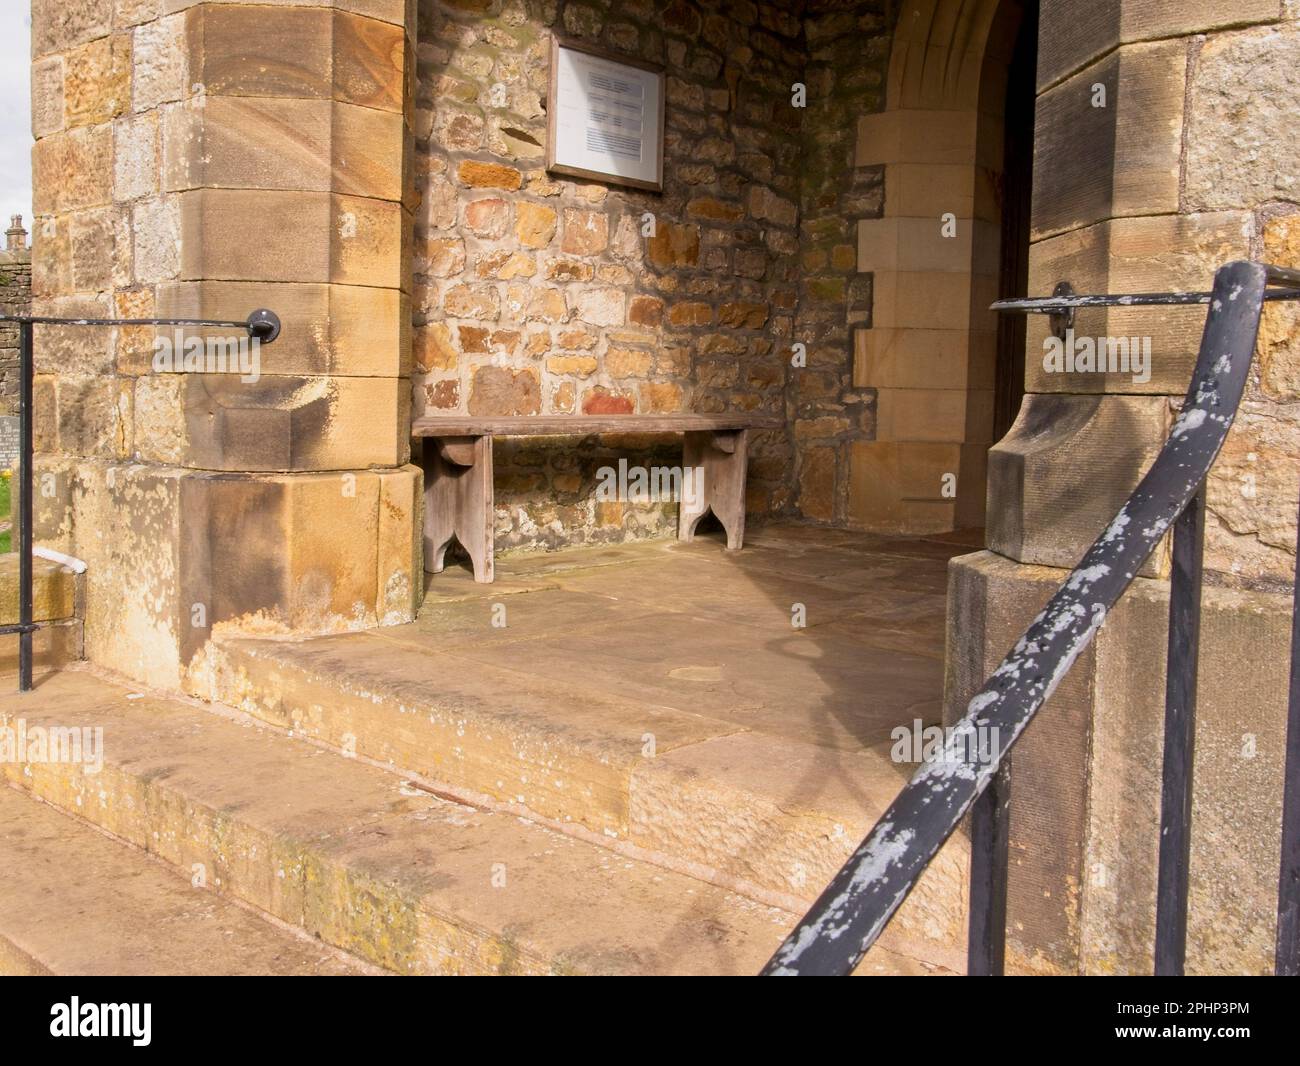 St Leonard's Church, Entrance Porch with old wooden bench Downham, Lancashire, United Kingdom, Stock Photo